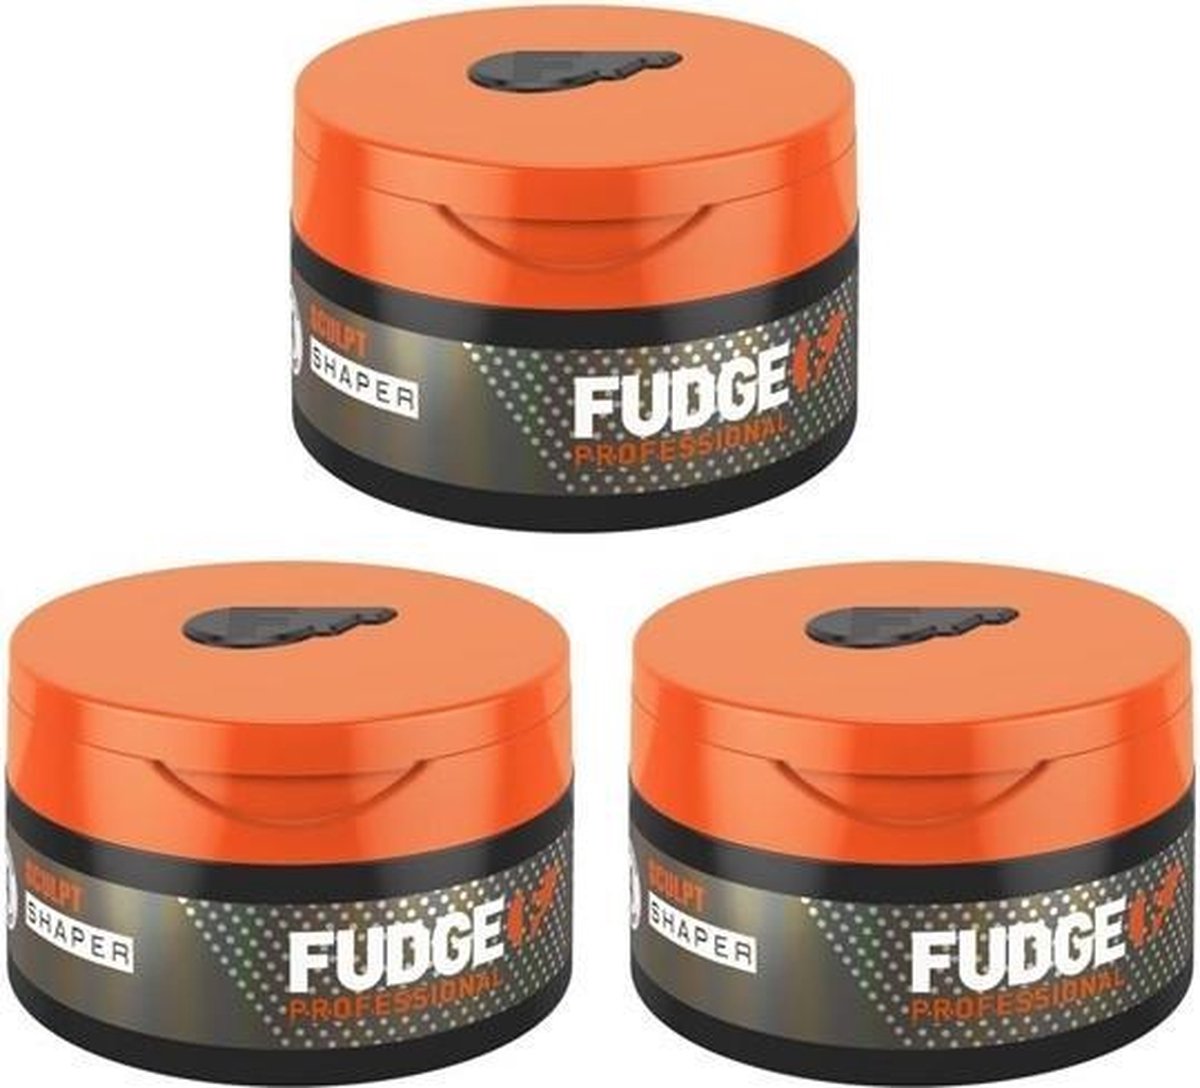 Fudge Shaper 3 stuks wax - 75gr bol.com